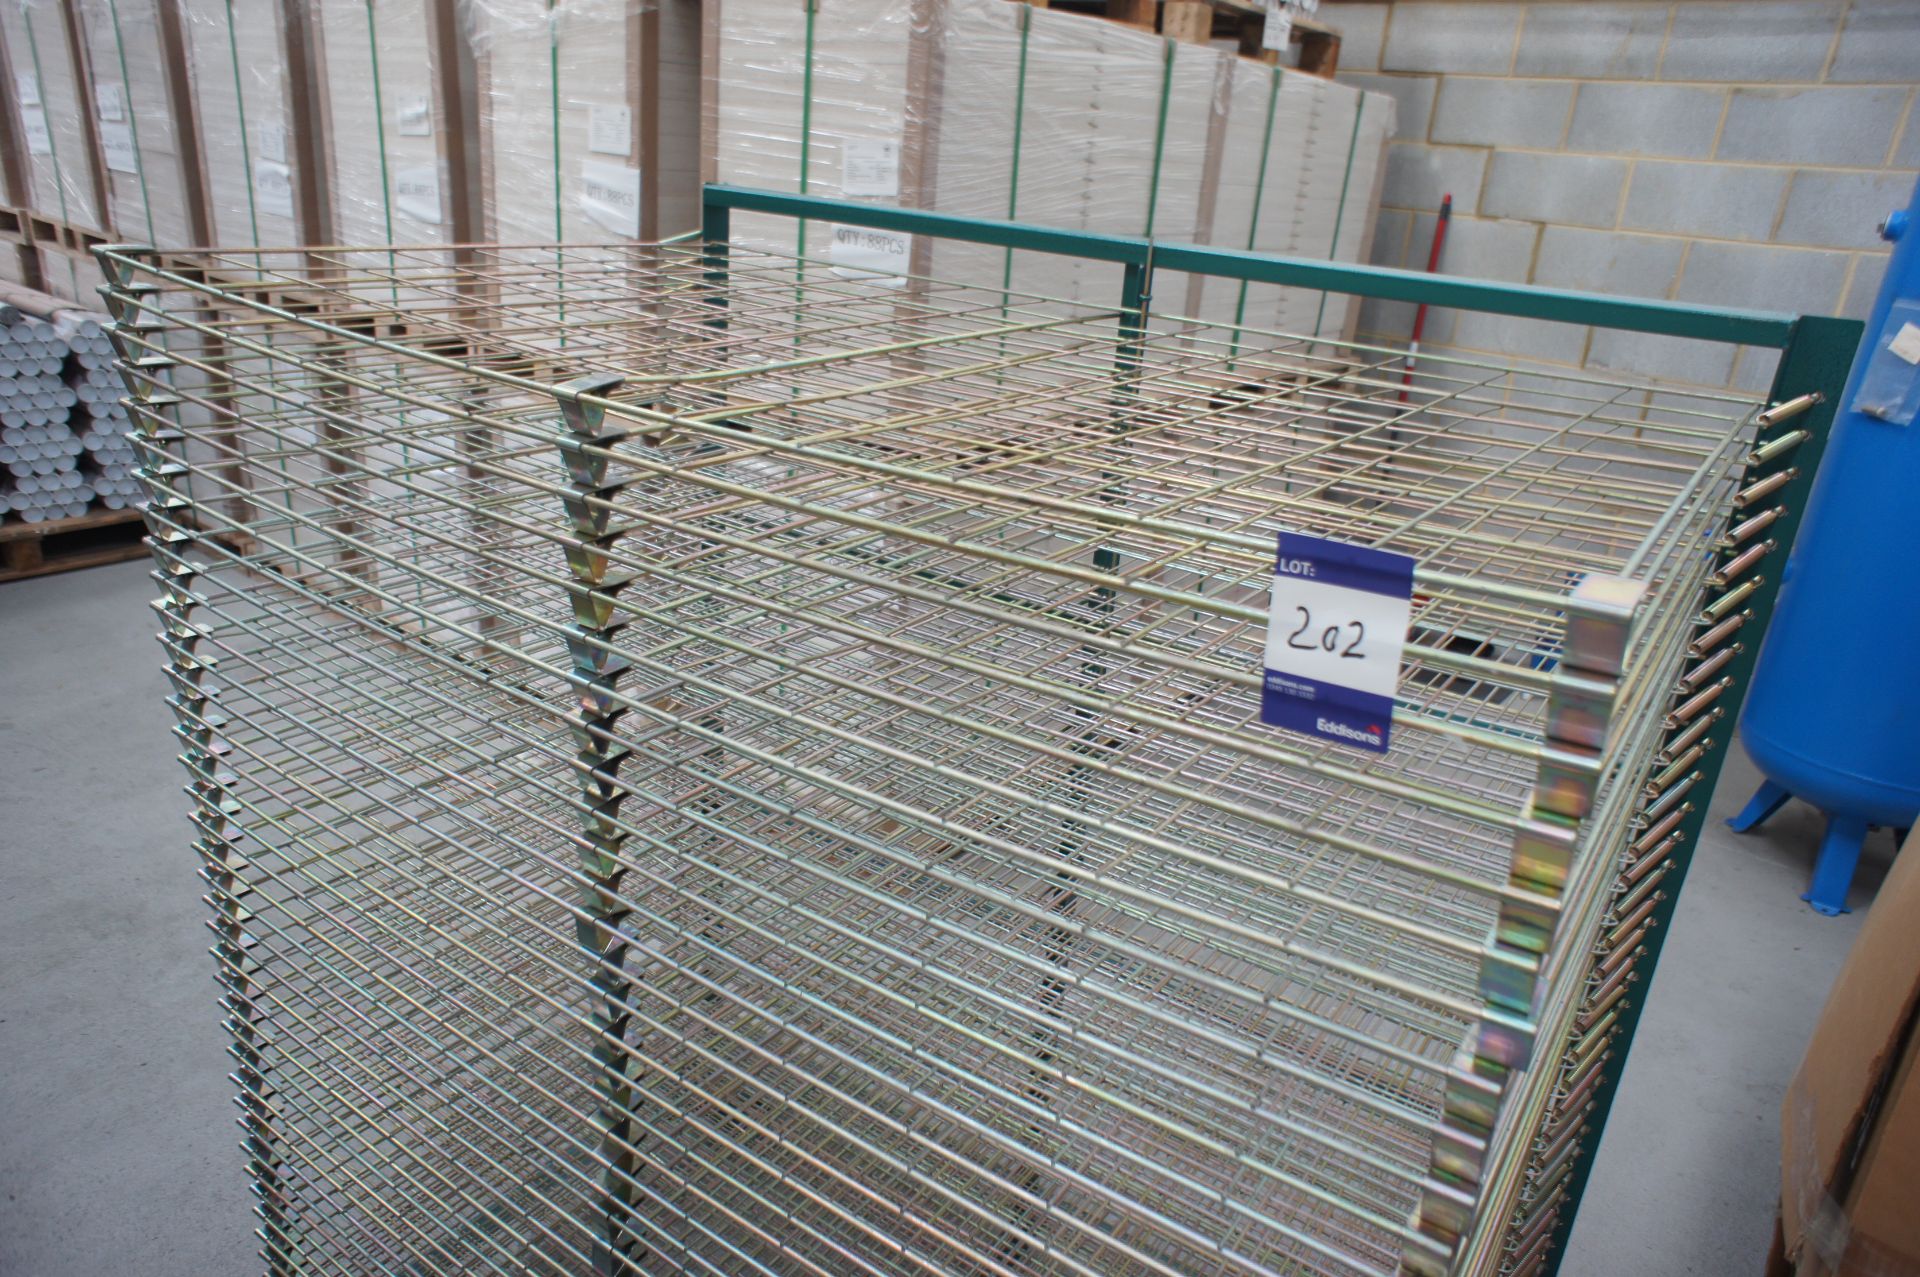 Steel fabricated mobile drying rack, with 40 racks - Image 3 of 3